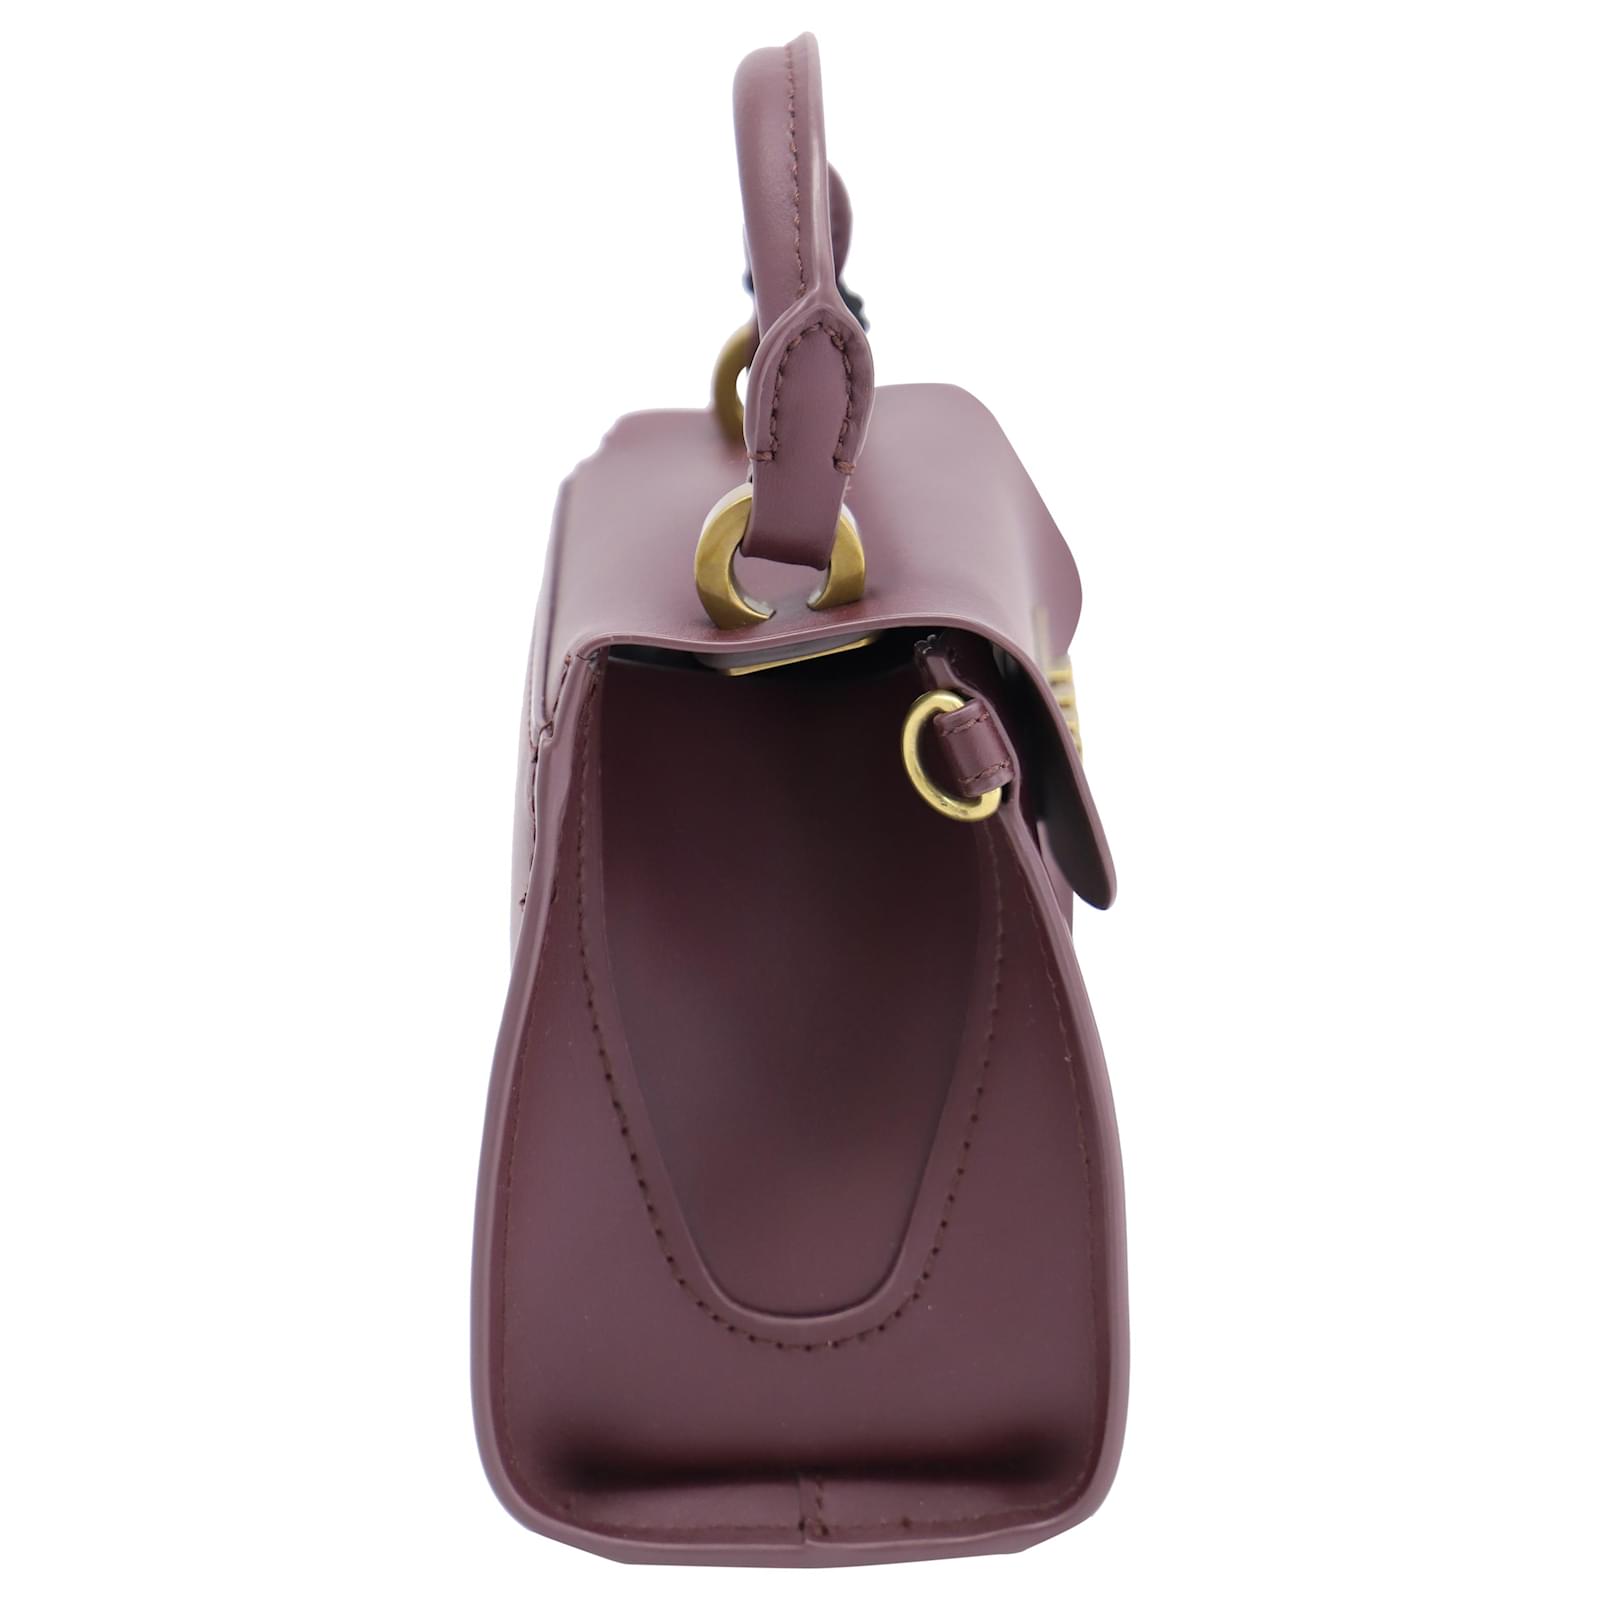 Zac Posen Eartha Iconic Mini Top Handle Bag in Violet Leather